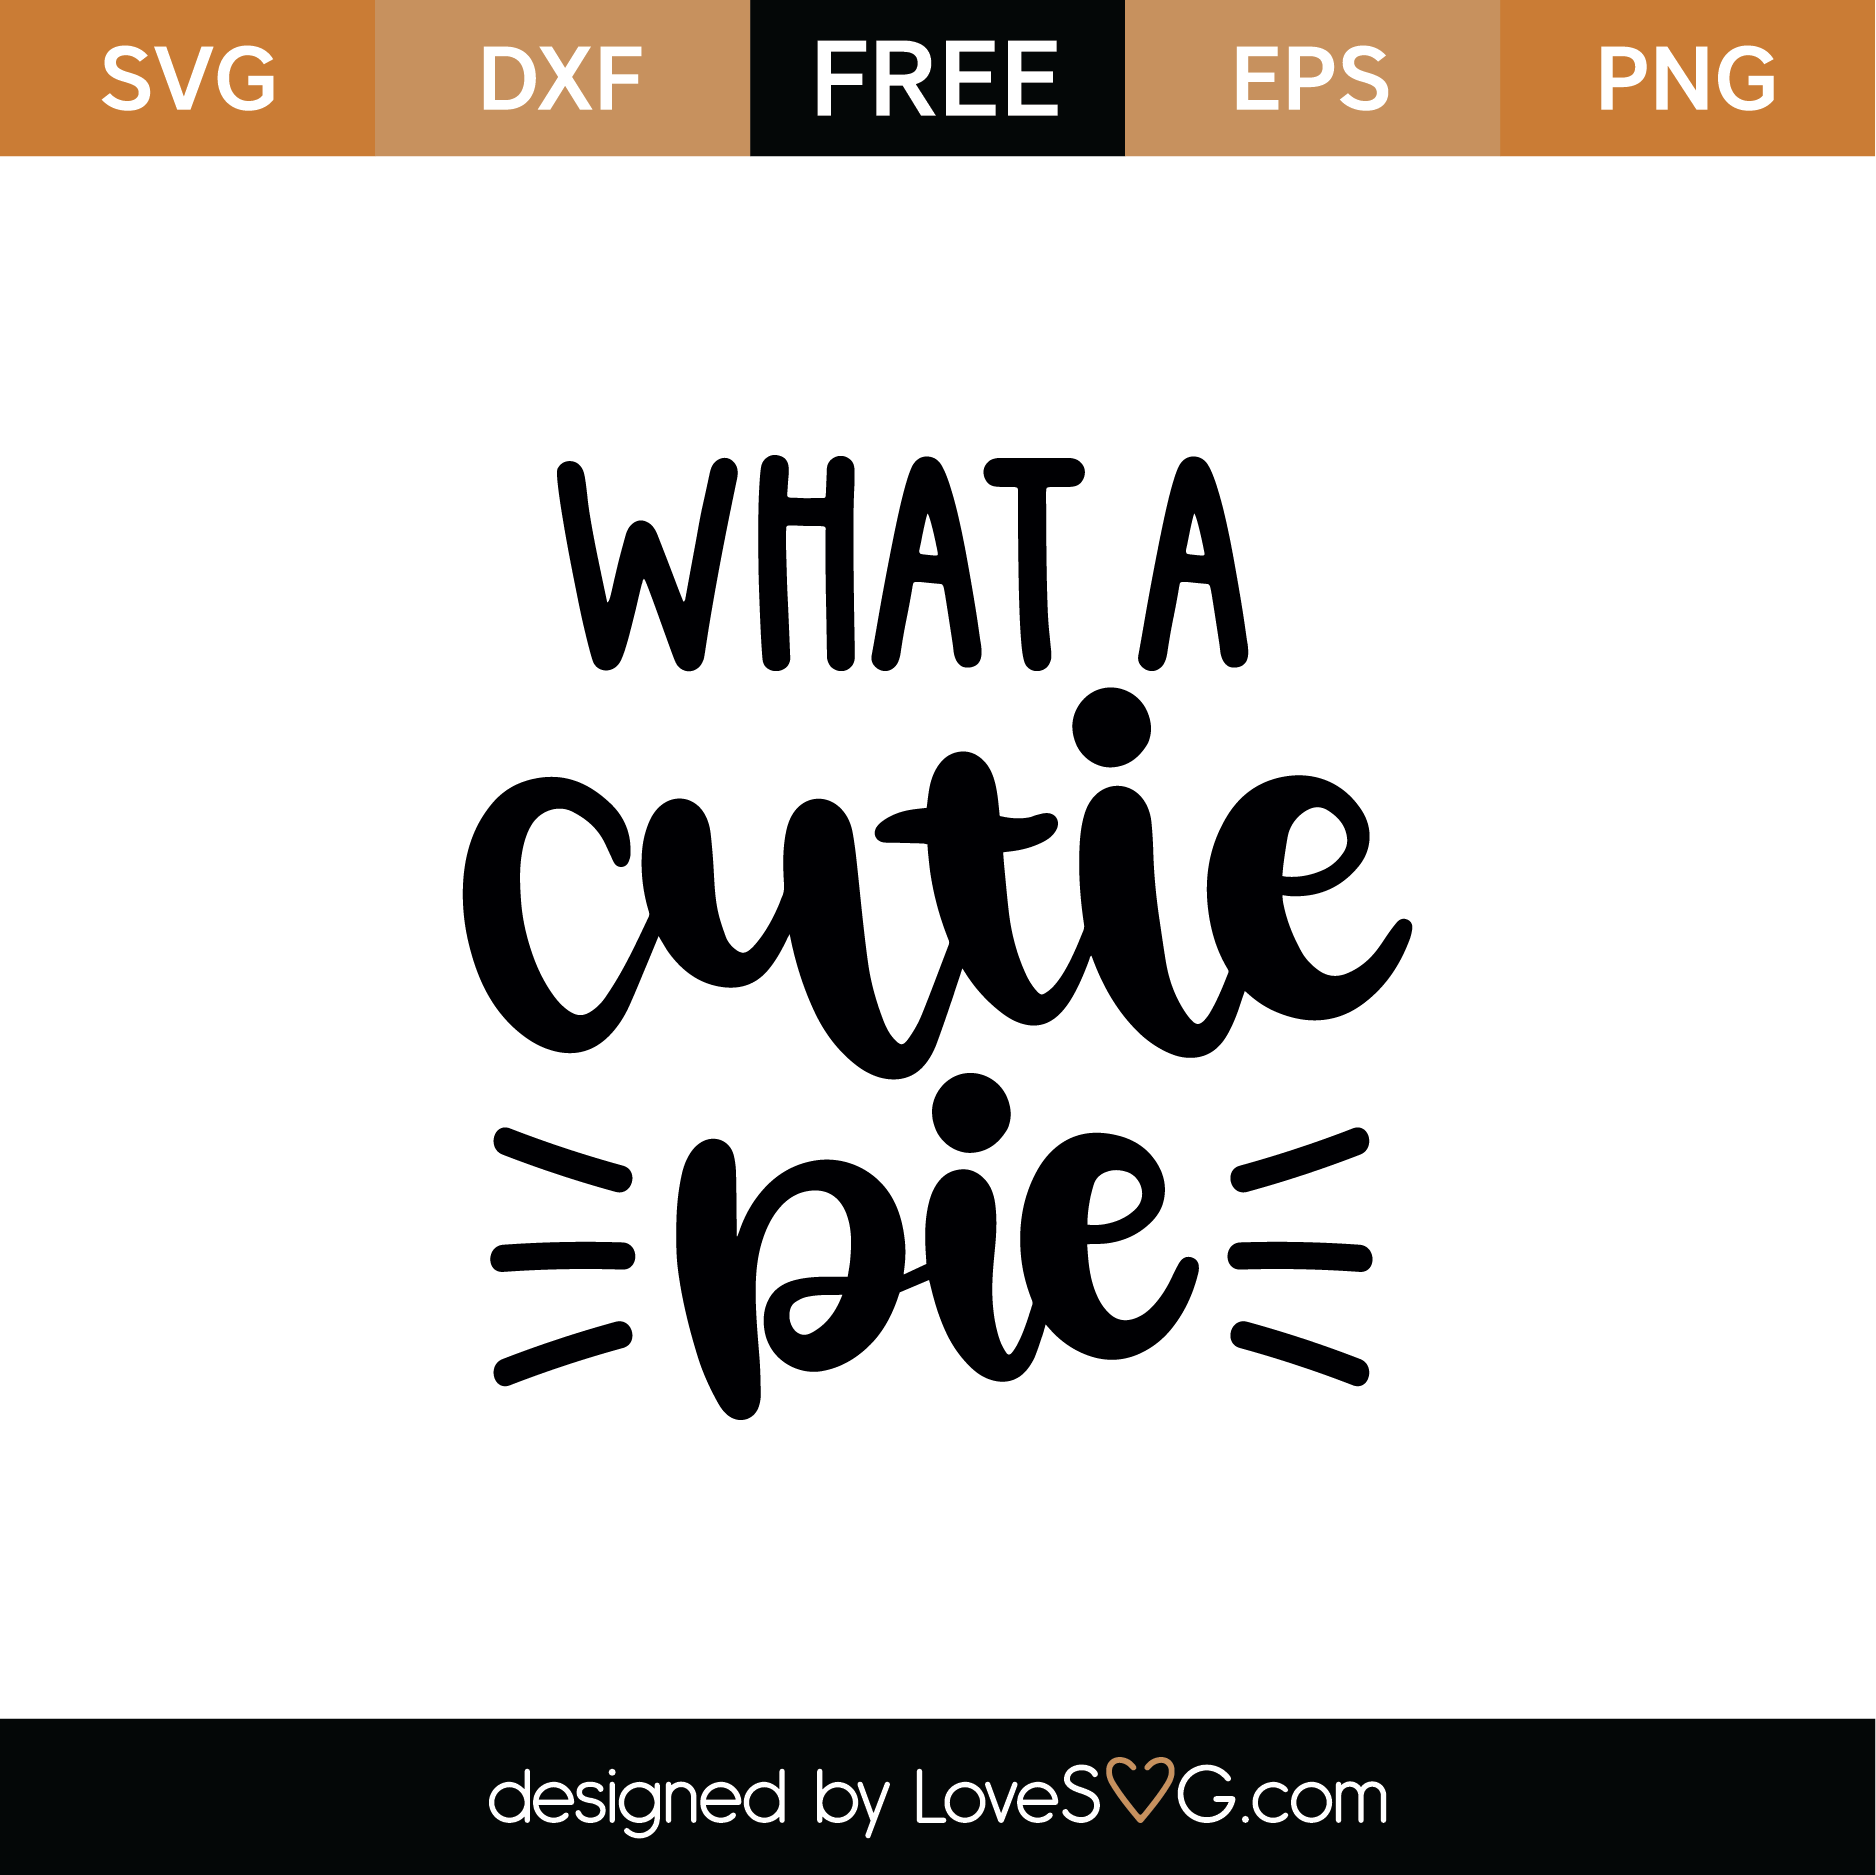 Download Free What A Cutie Pie SVG Cut File | Lovesvg.com